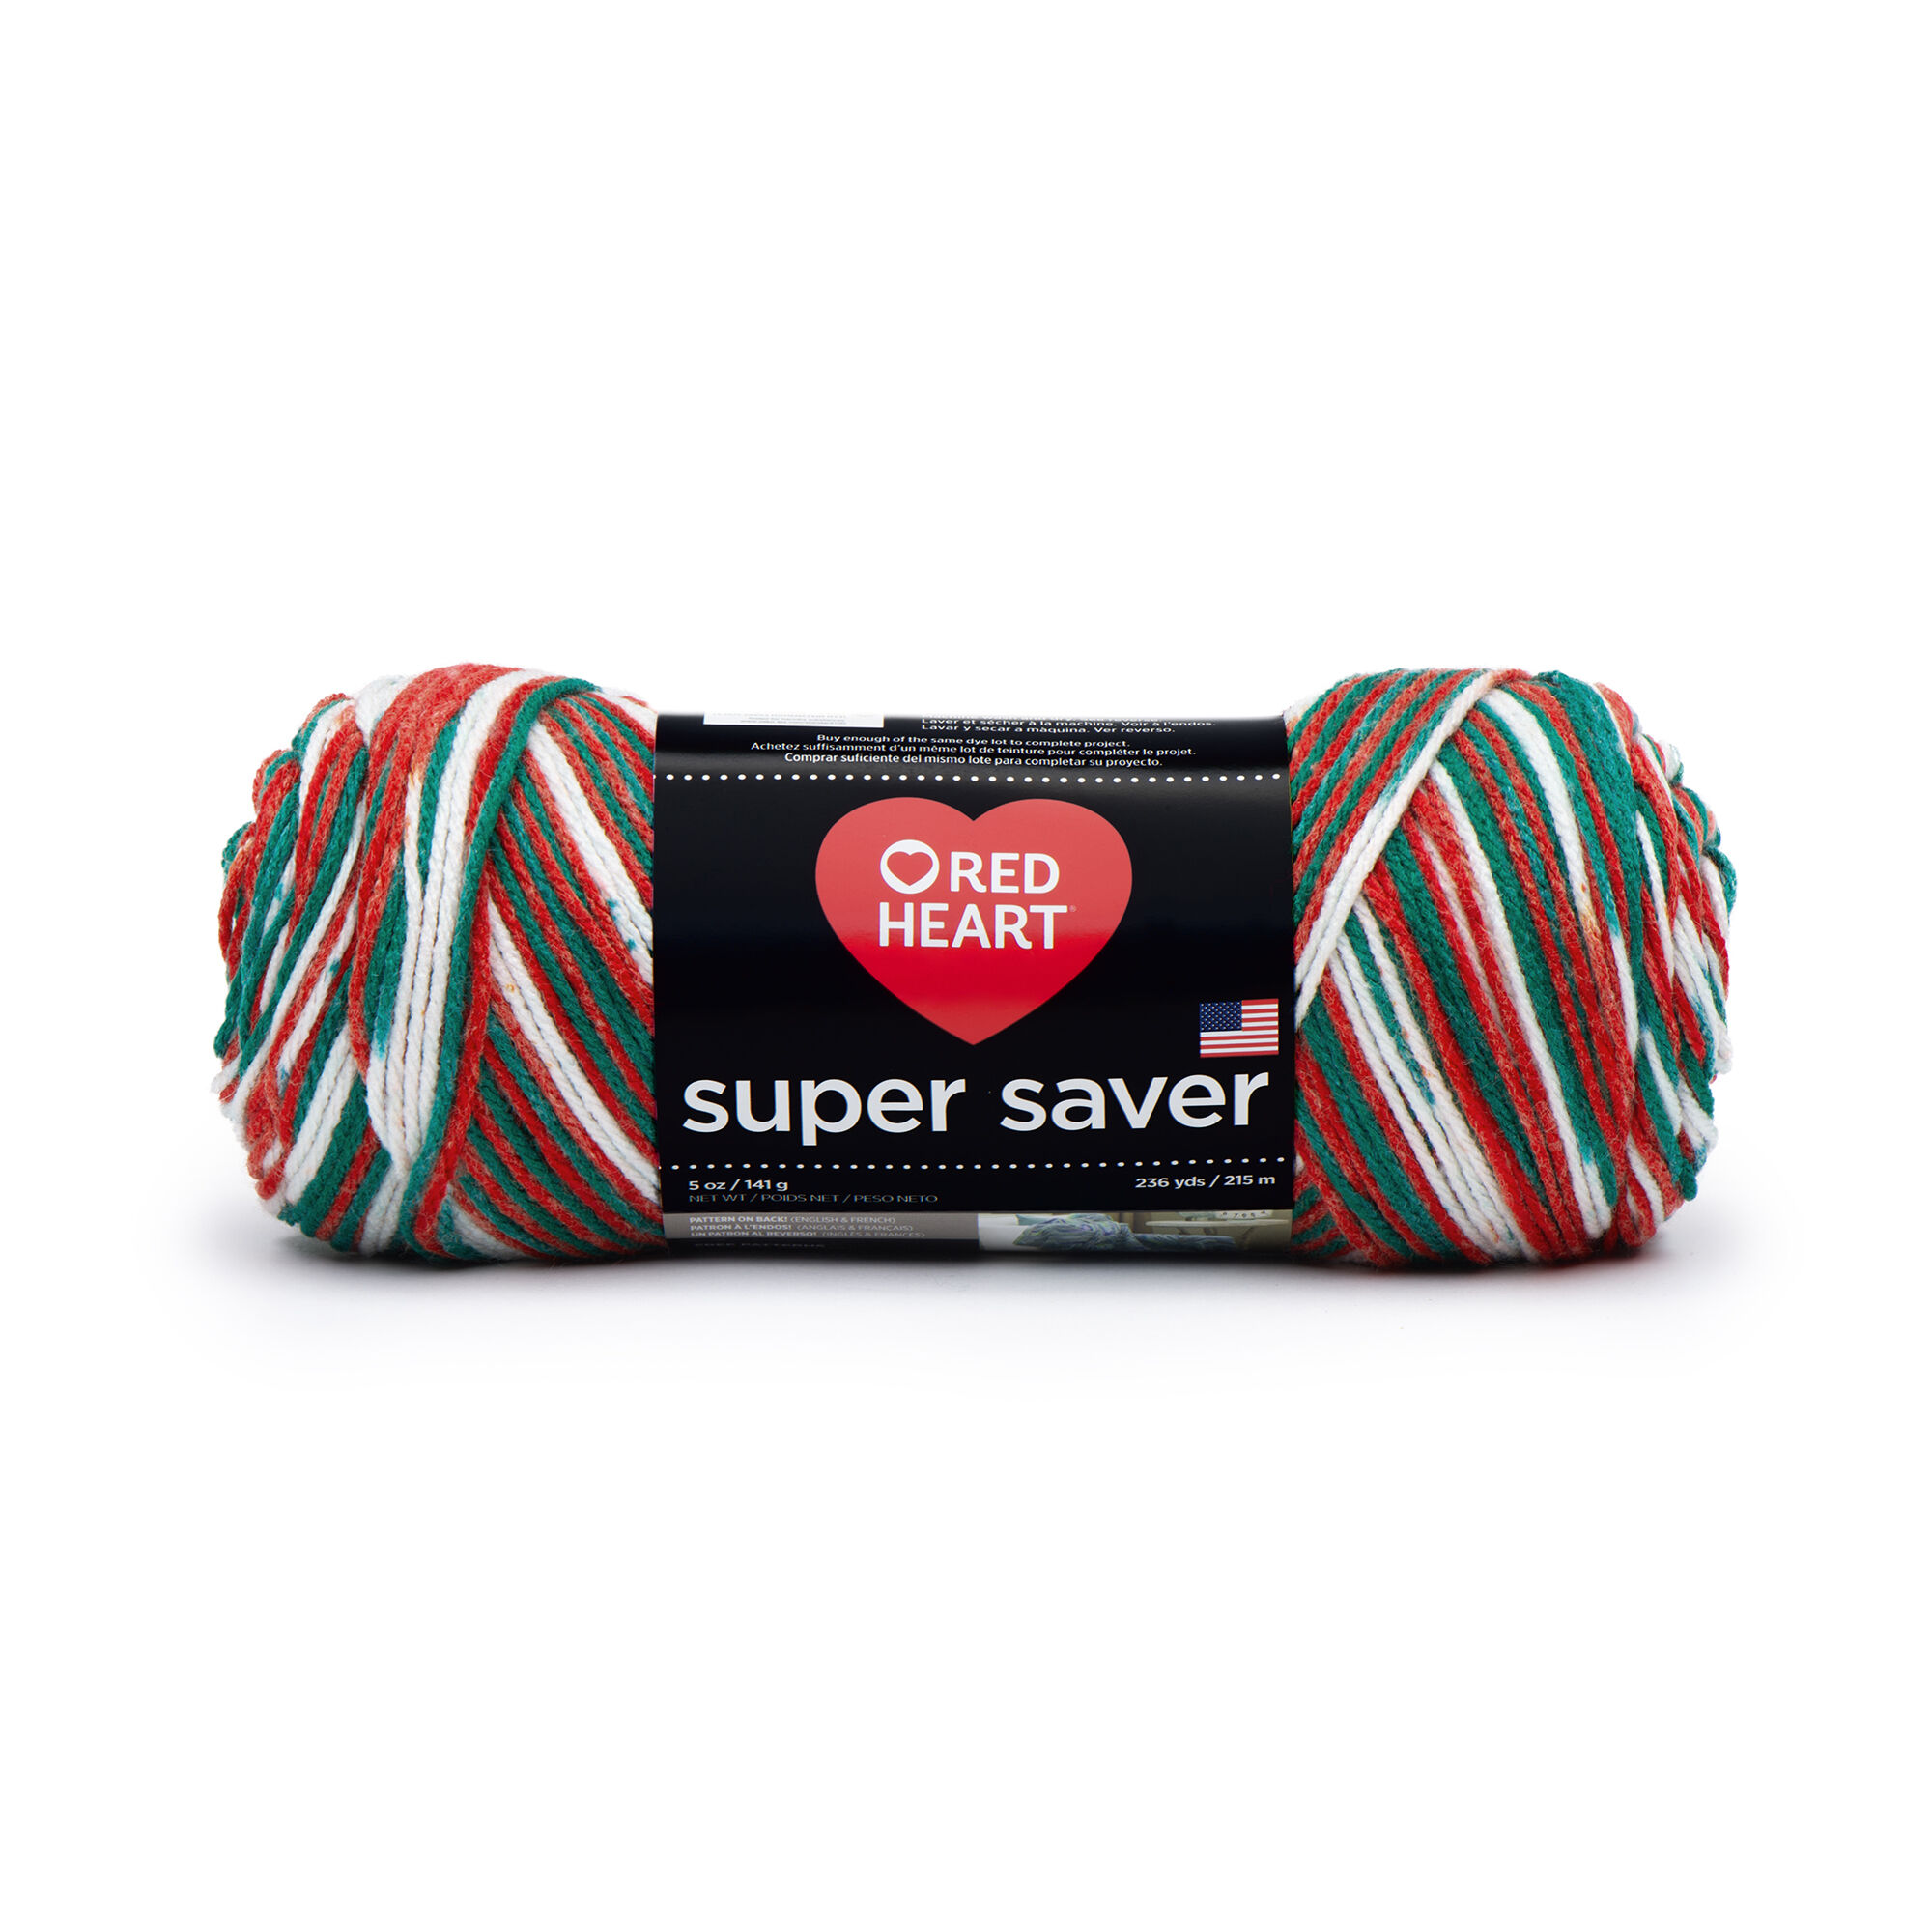 Red Heart Super Saver® 4 Medium Acrylic Yarn, Mistletoe 5oz/141g, 236 Yards - image 1 of 7